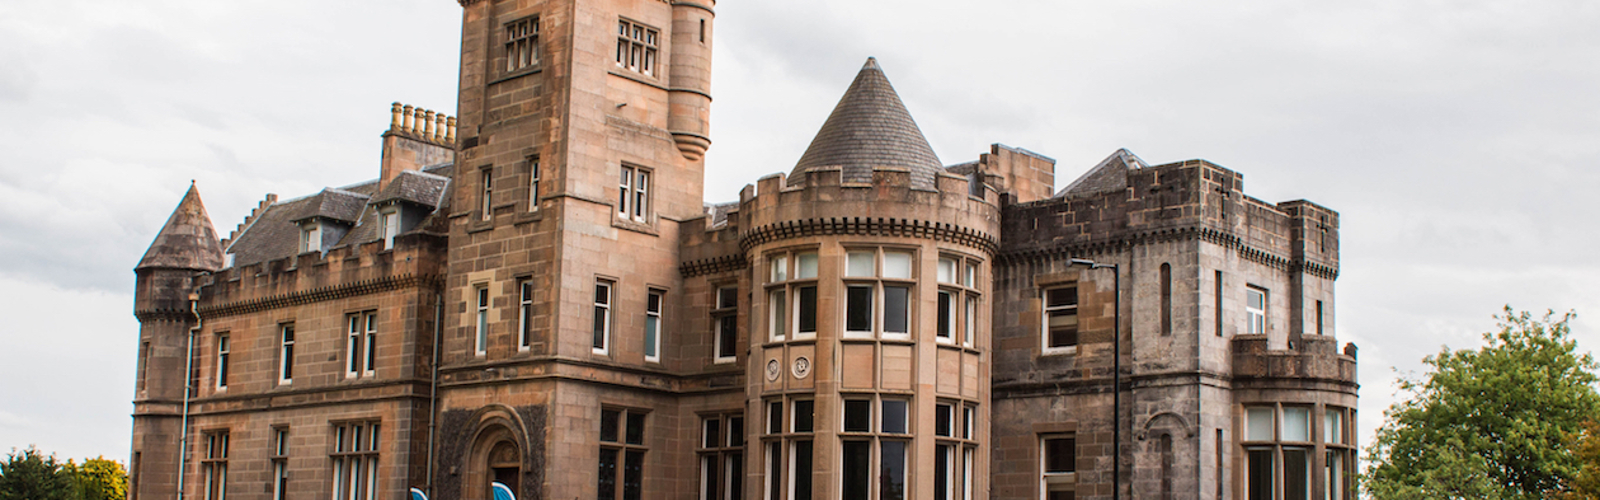 Airthrey Castle, University of Stirling, Scotland, UK